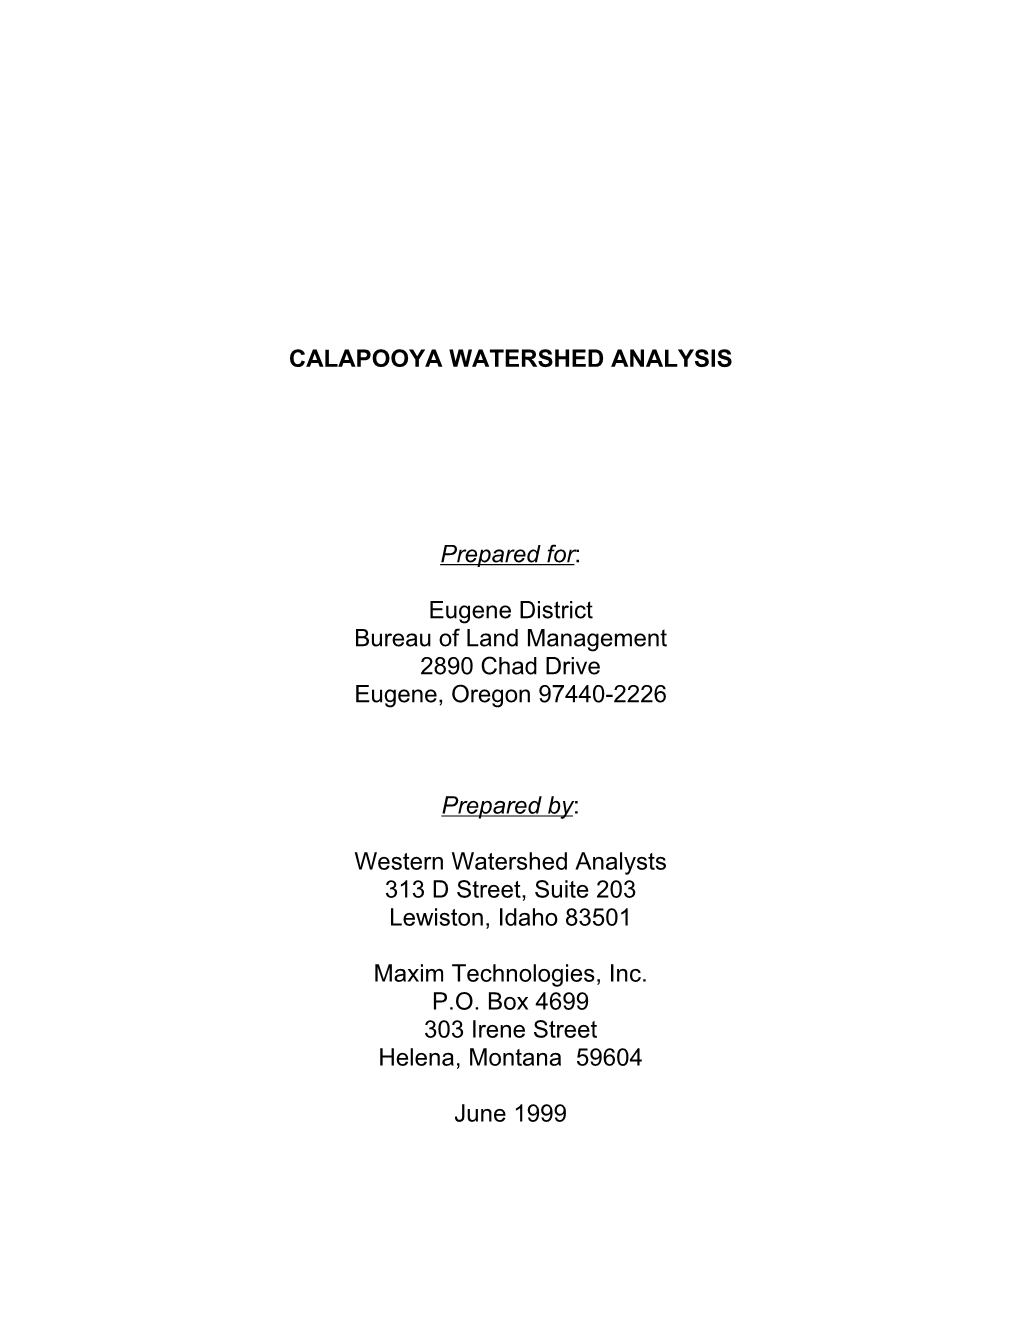 Calapooya Watershed Analysis